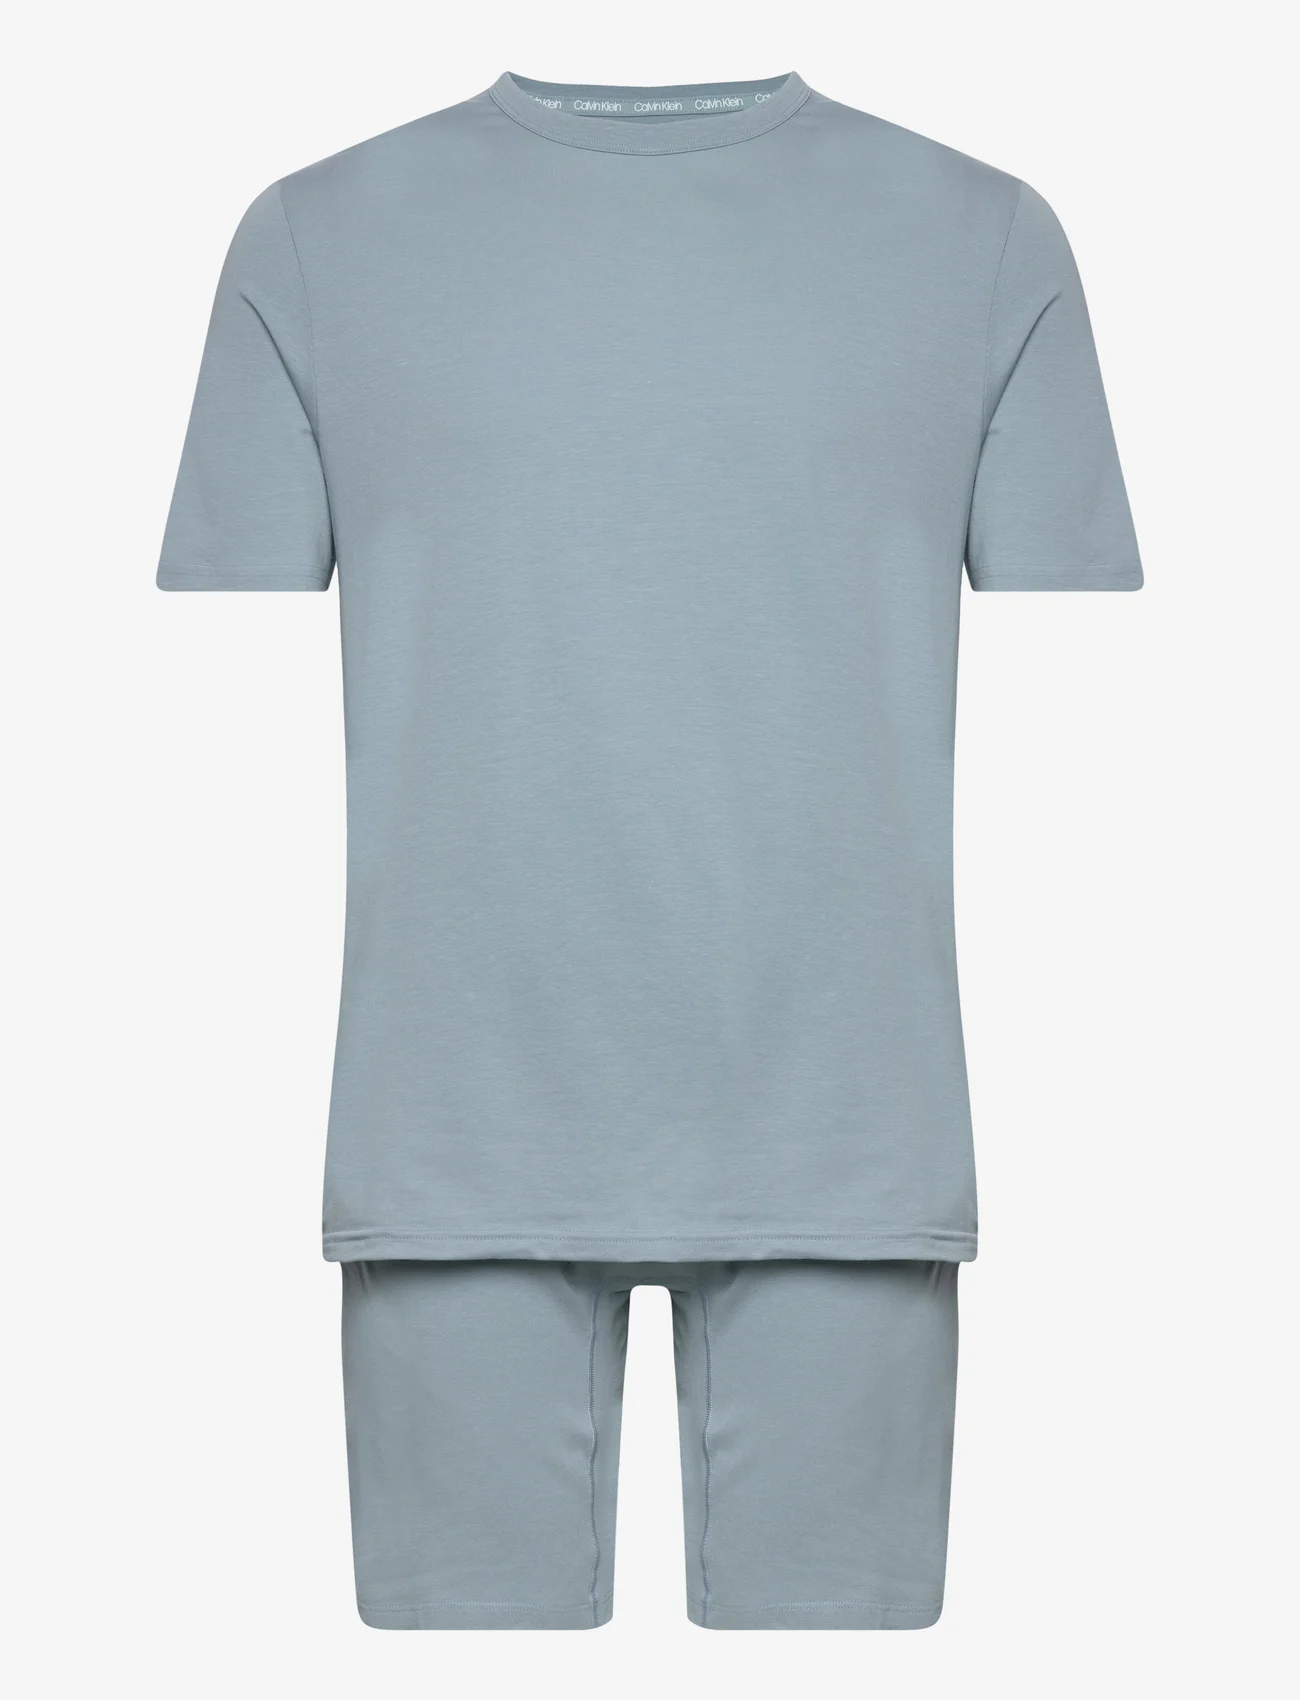 Calvin Klein - S/S SHORT SET - pyjamasets - arona - 0